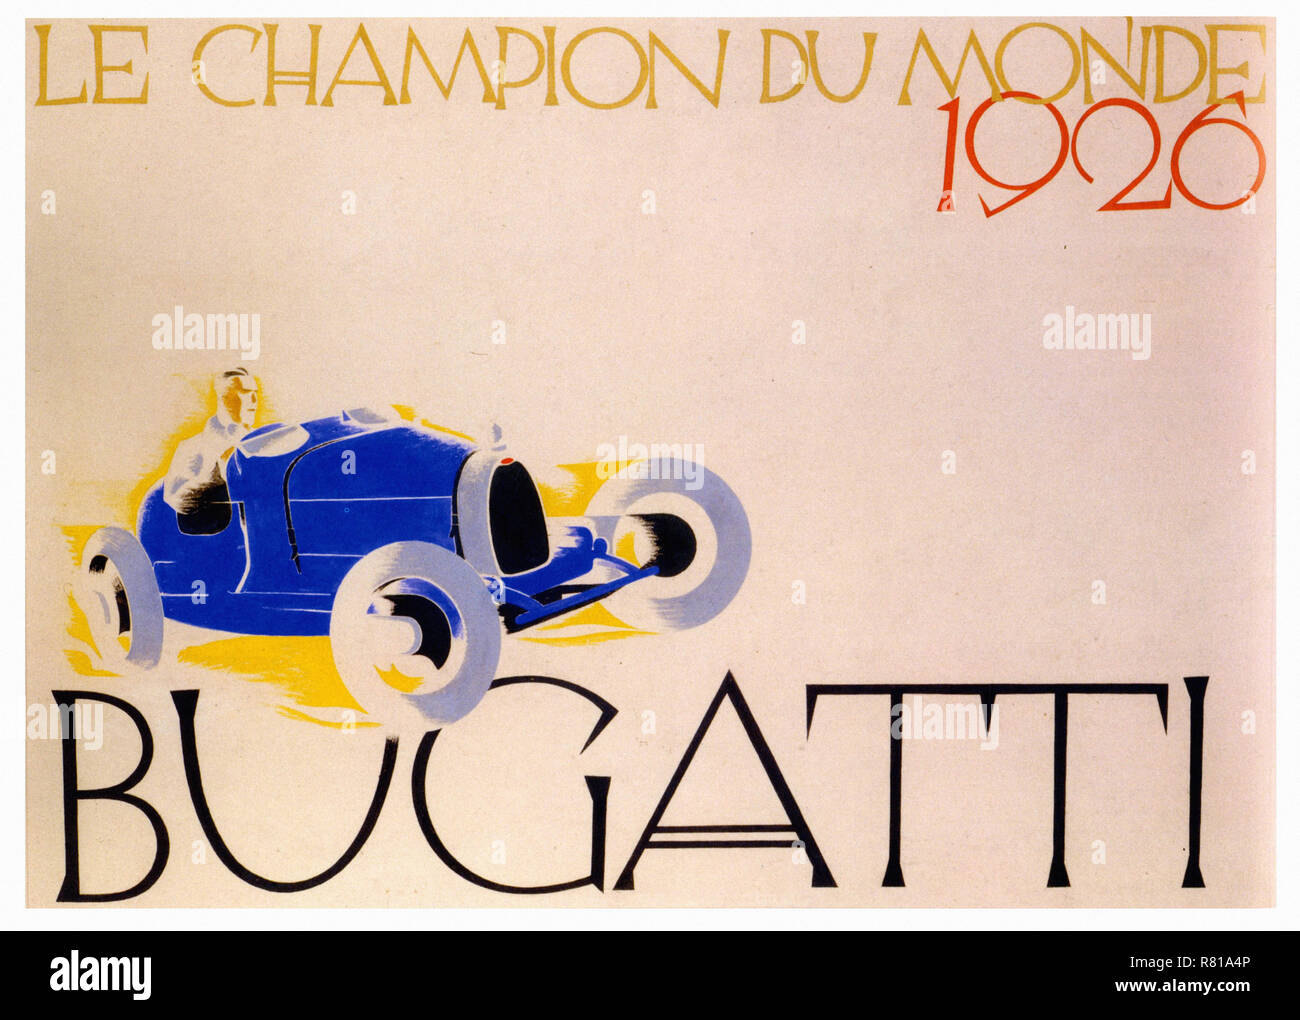 1924 Bugatti French France Automobile Car Vintage Advertisement Art Poster Print